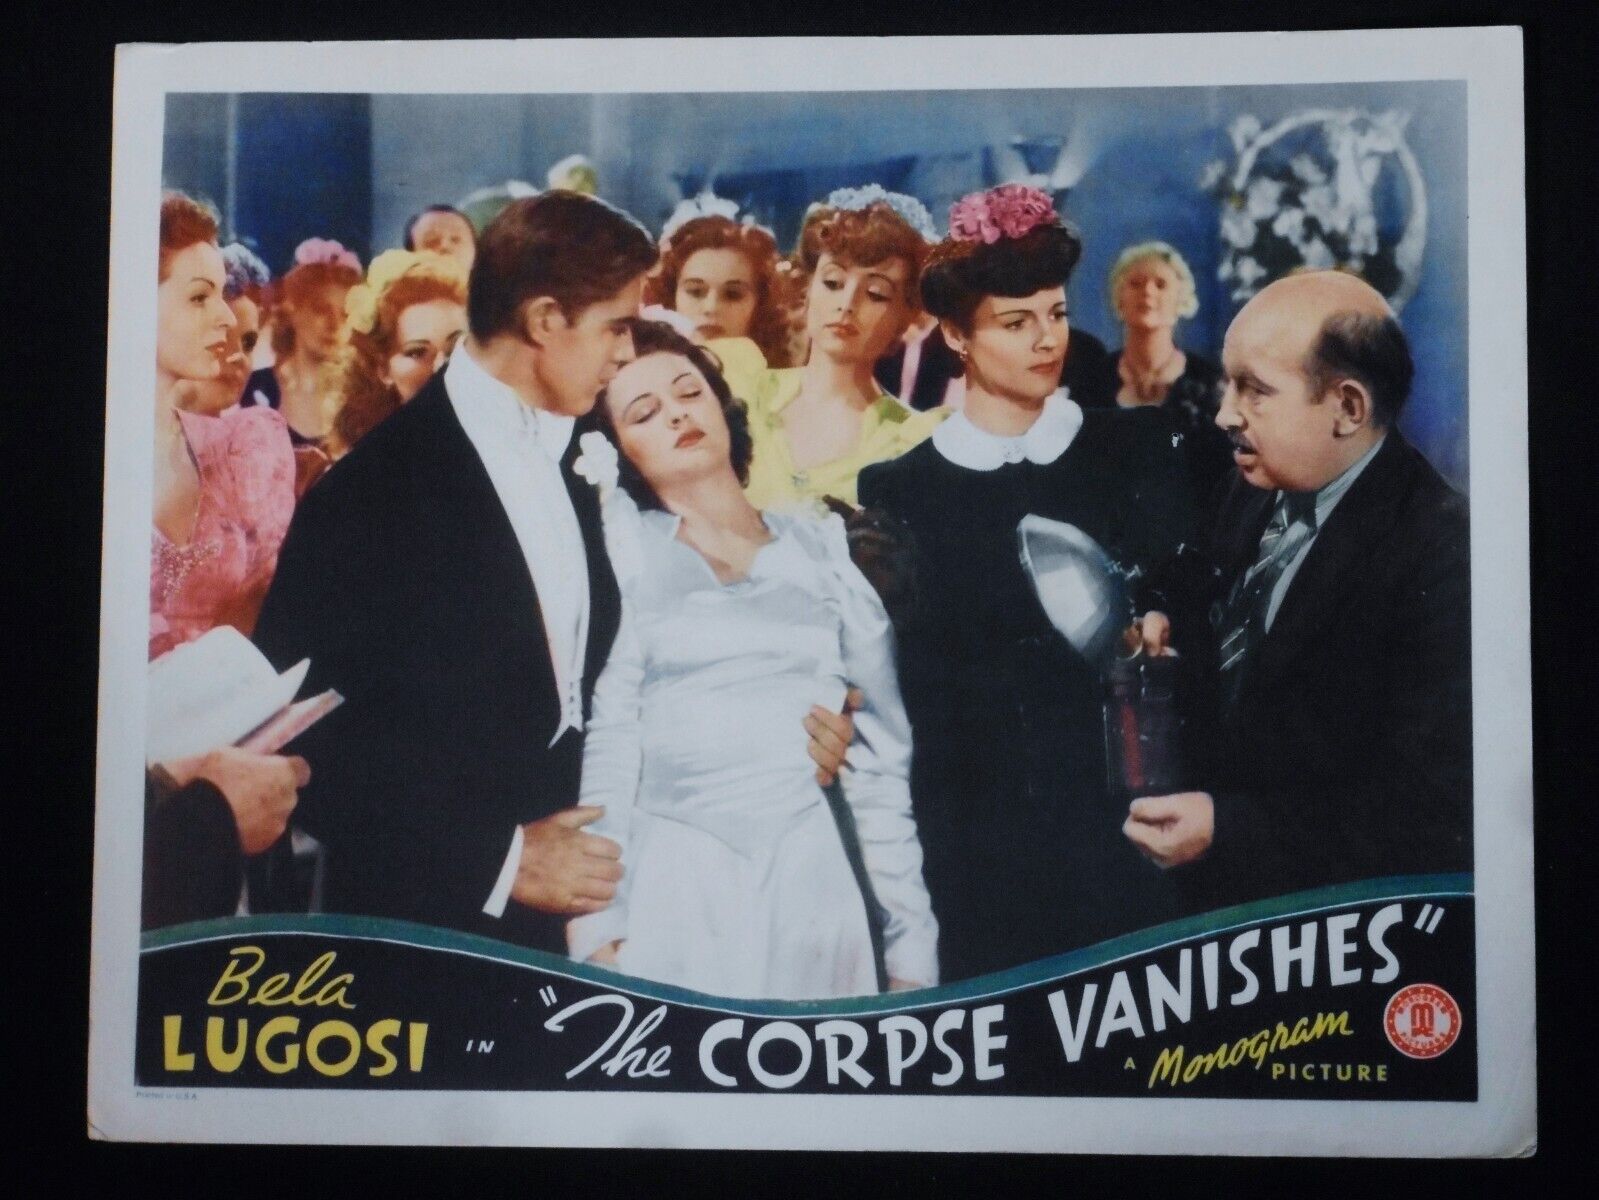 THE CORPSE VANISHES 1942 * BELA LUGOSI * CLASSIC POVERTY ROW HORROR LOBBY CARD!!